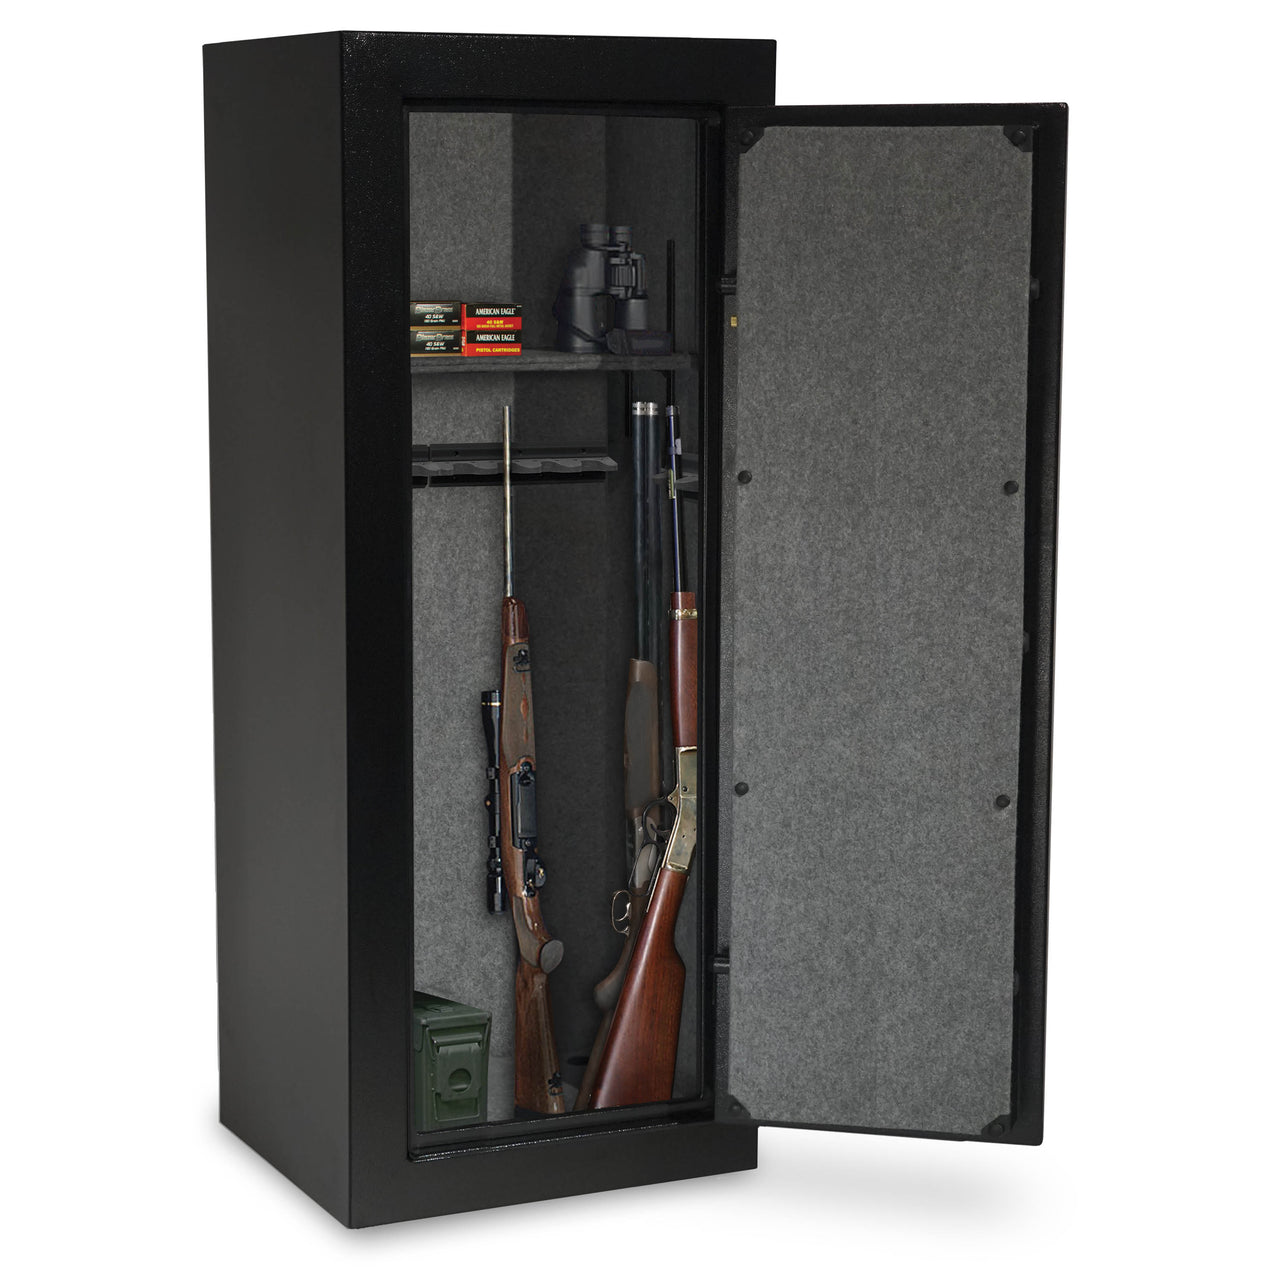 Sports Afield SA5520INS Instinct Series – FIRE-RATED 18-GUN SAFE